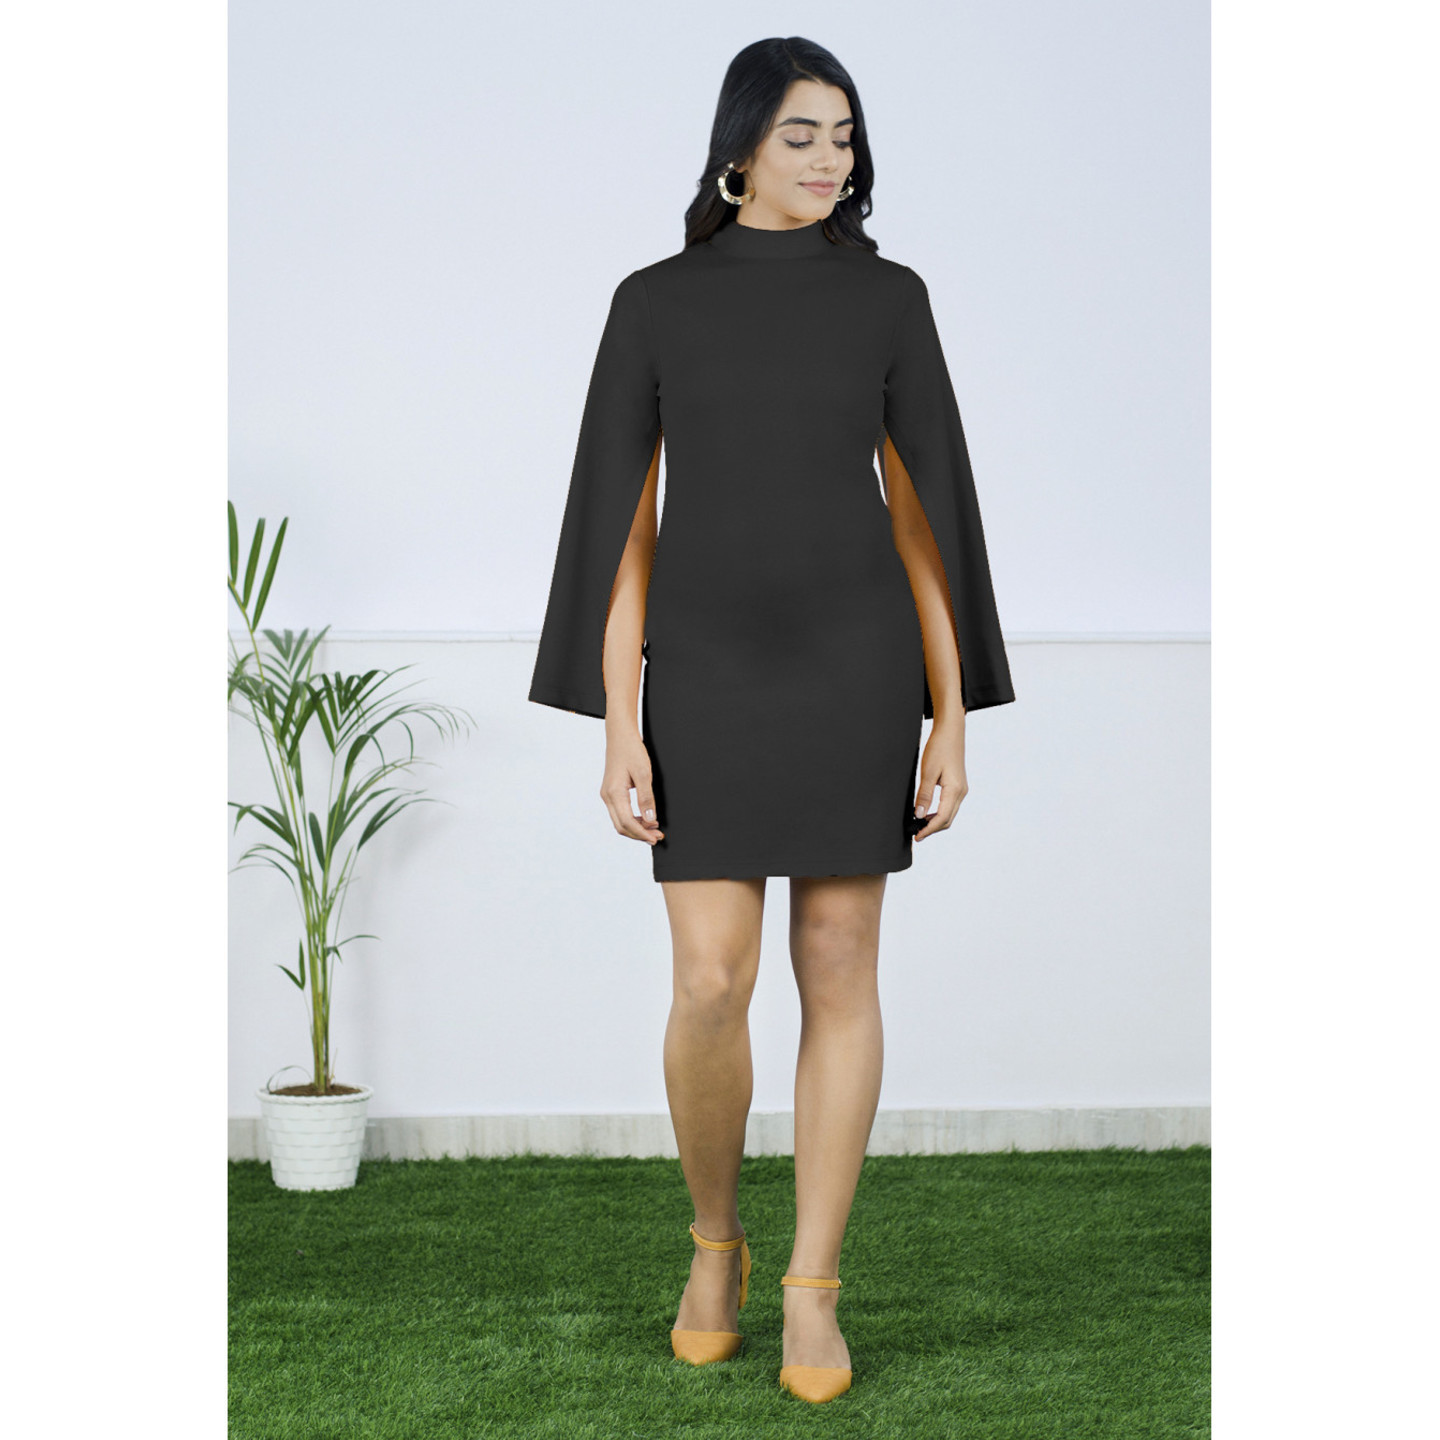 Paretto Womens Black Cape Sleeve Bodycon Dress